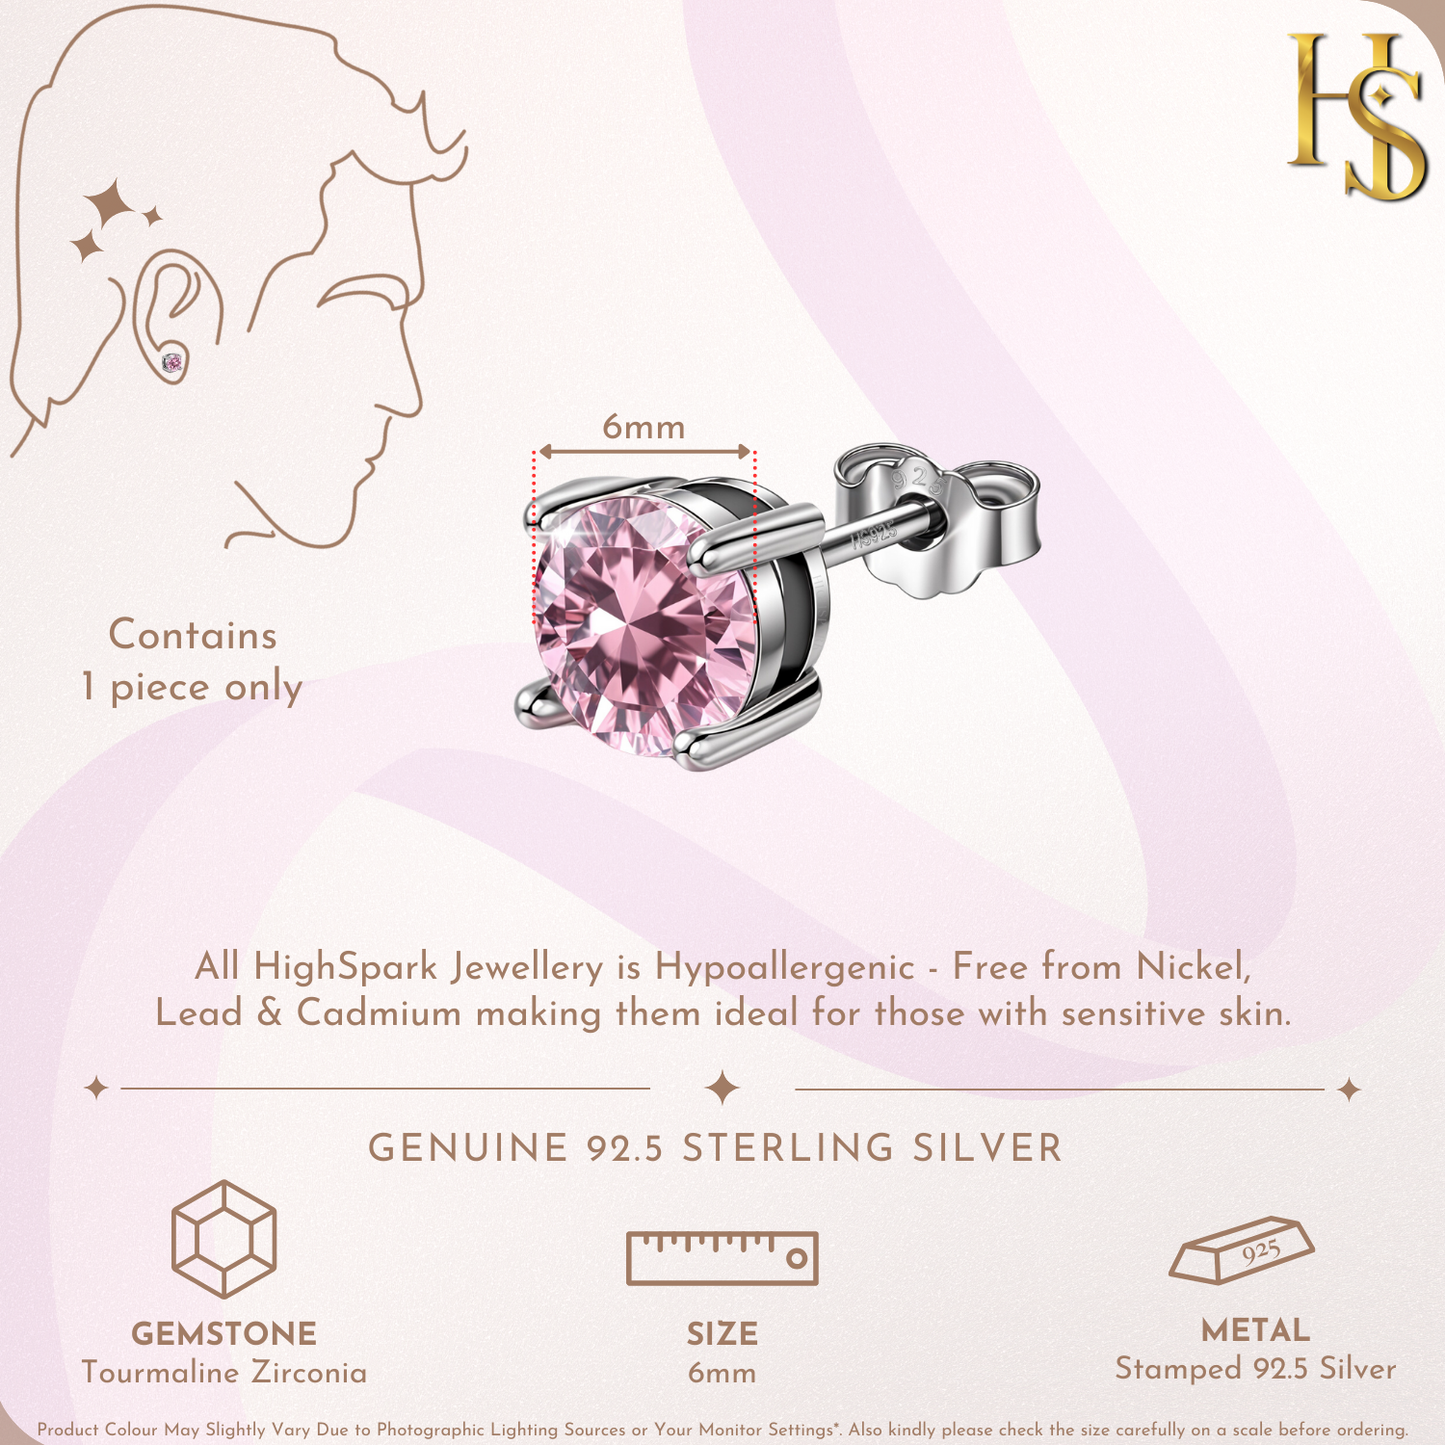 Men's Solitaire Stud Earring - 925 Silver - Birthstone October Tourmaline Zirconia - 1 Piece